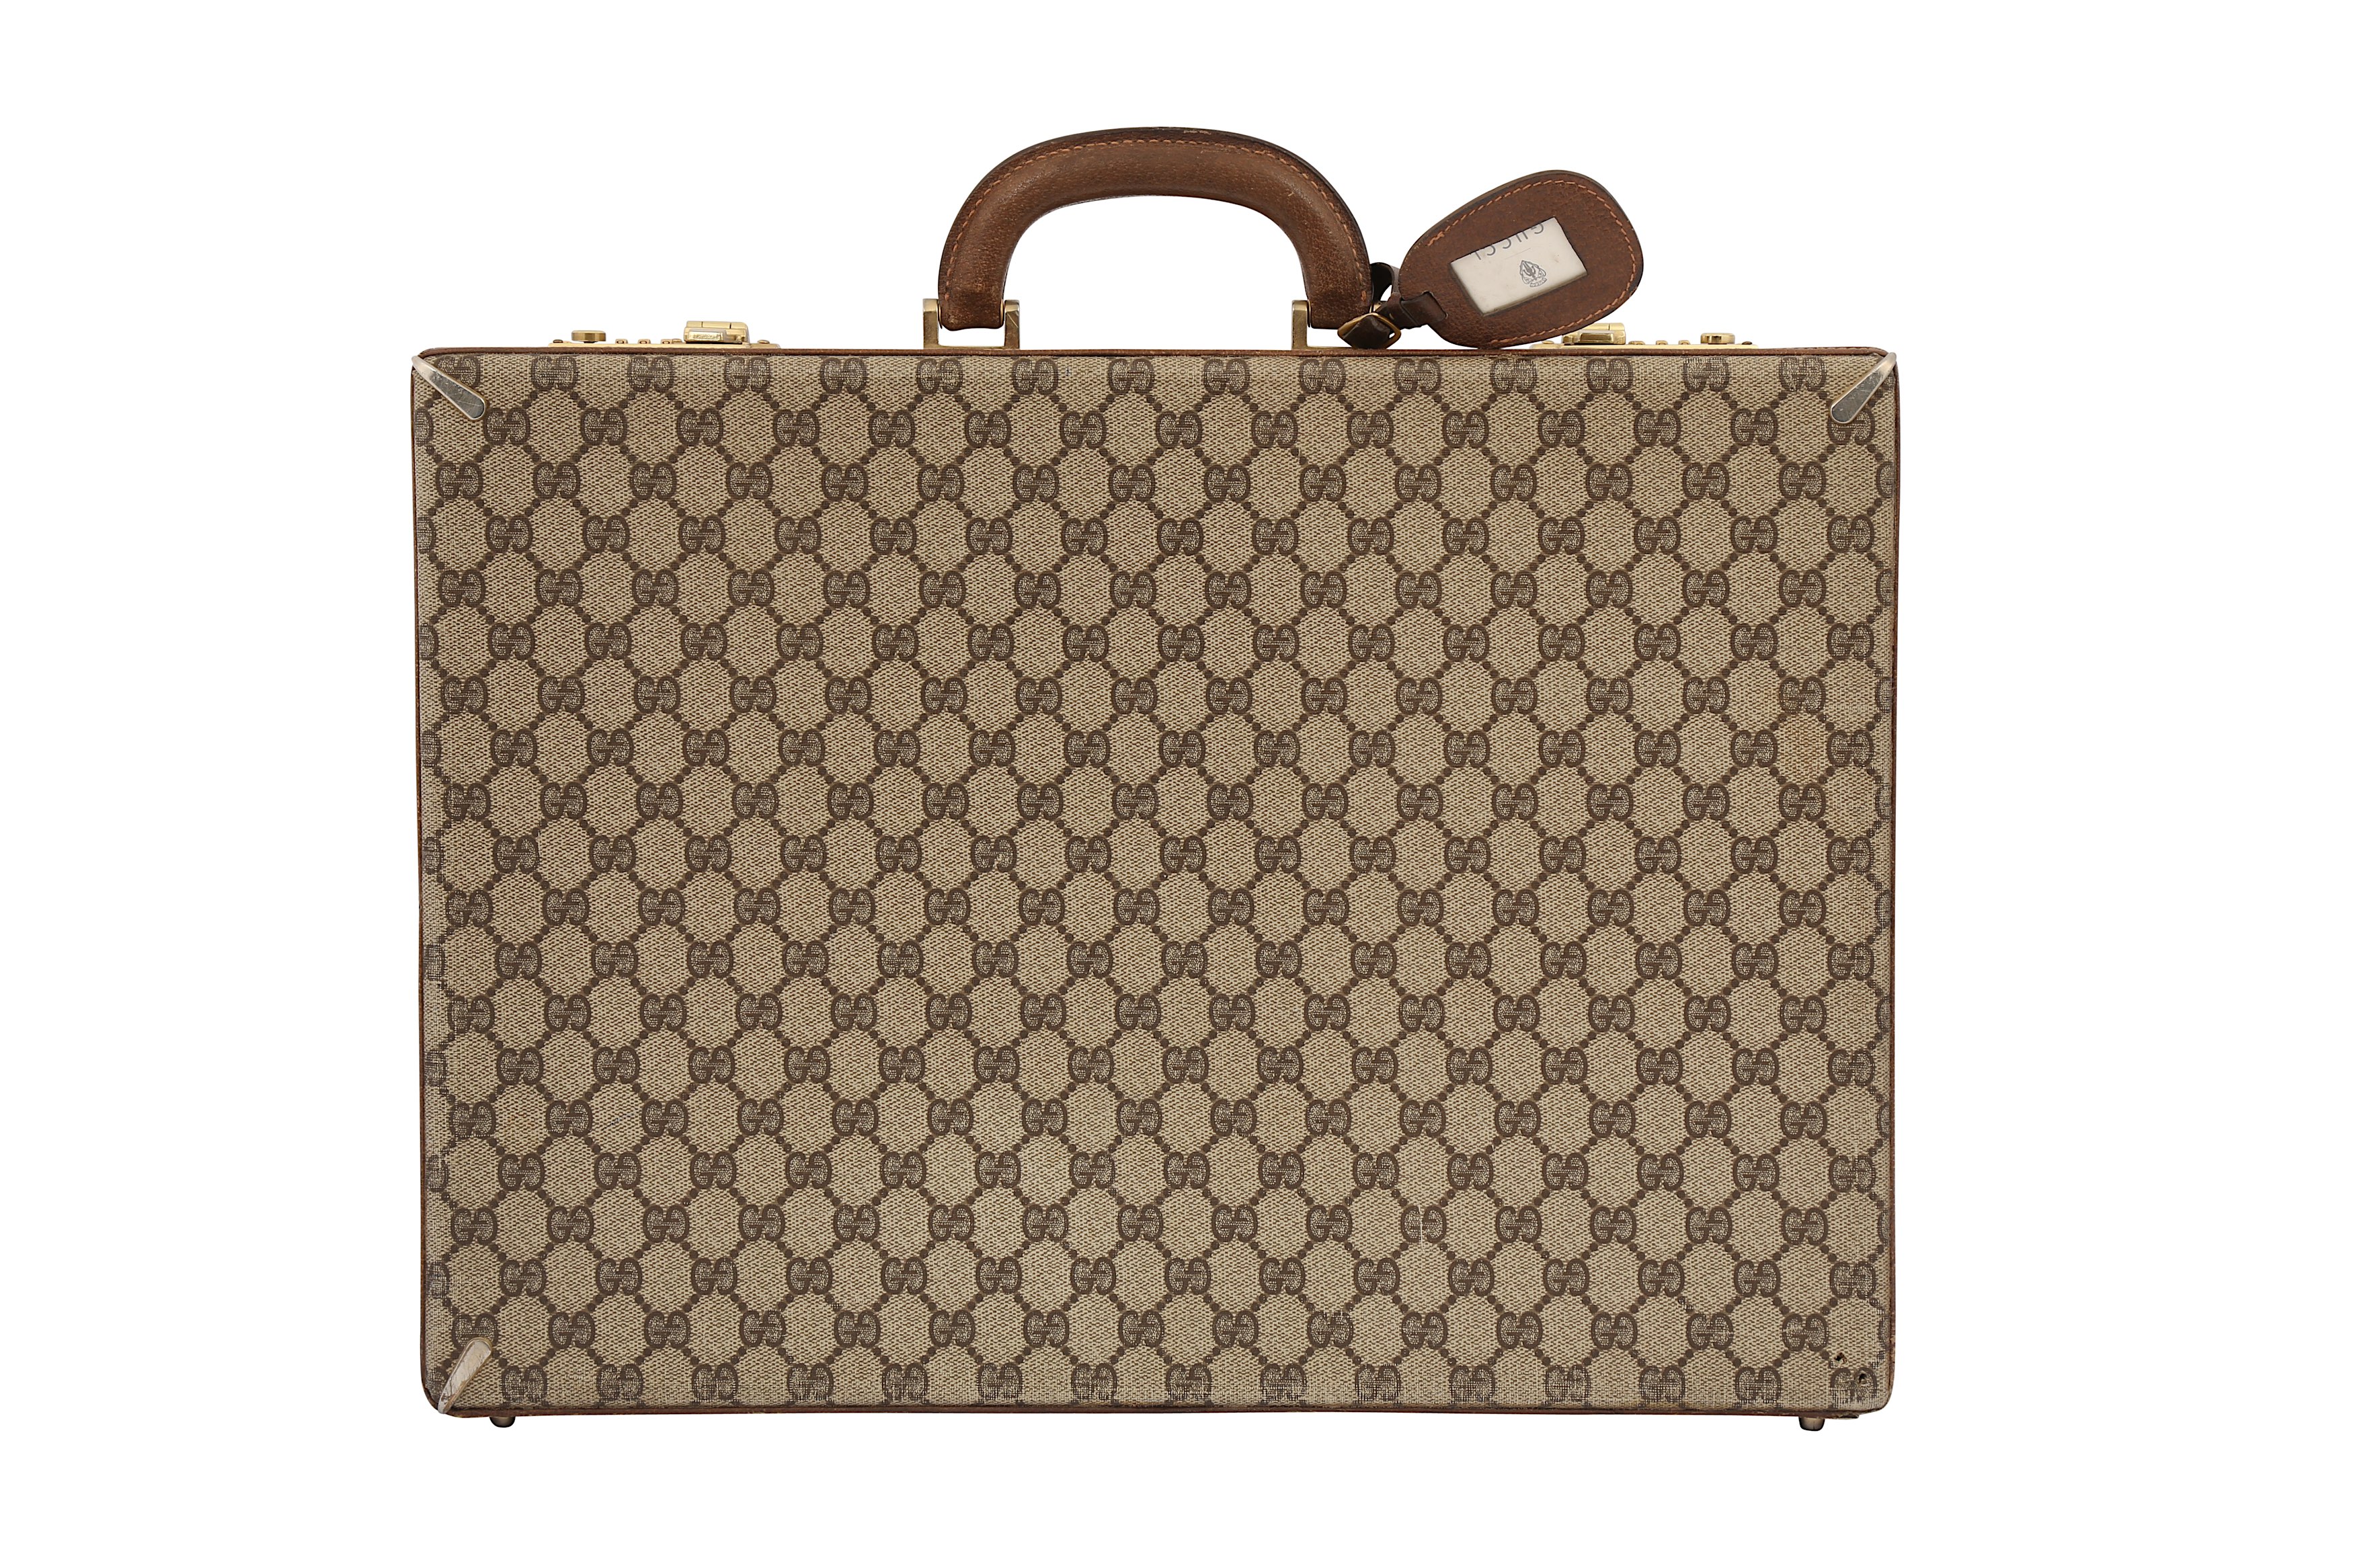 Gucci Beige Web Monogram Briefcase - Image 2 of 8